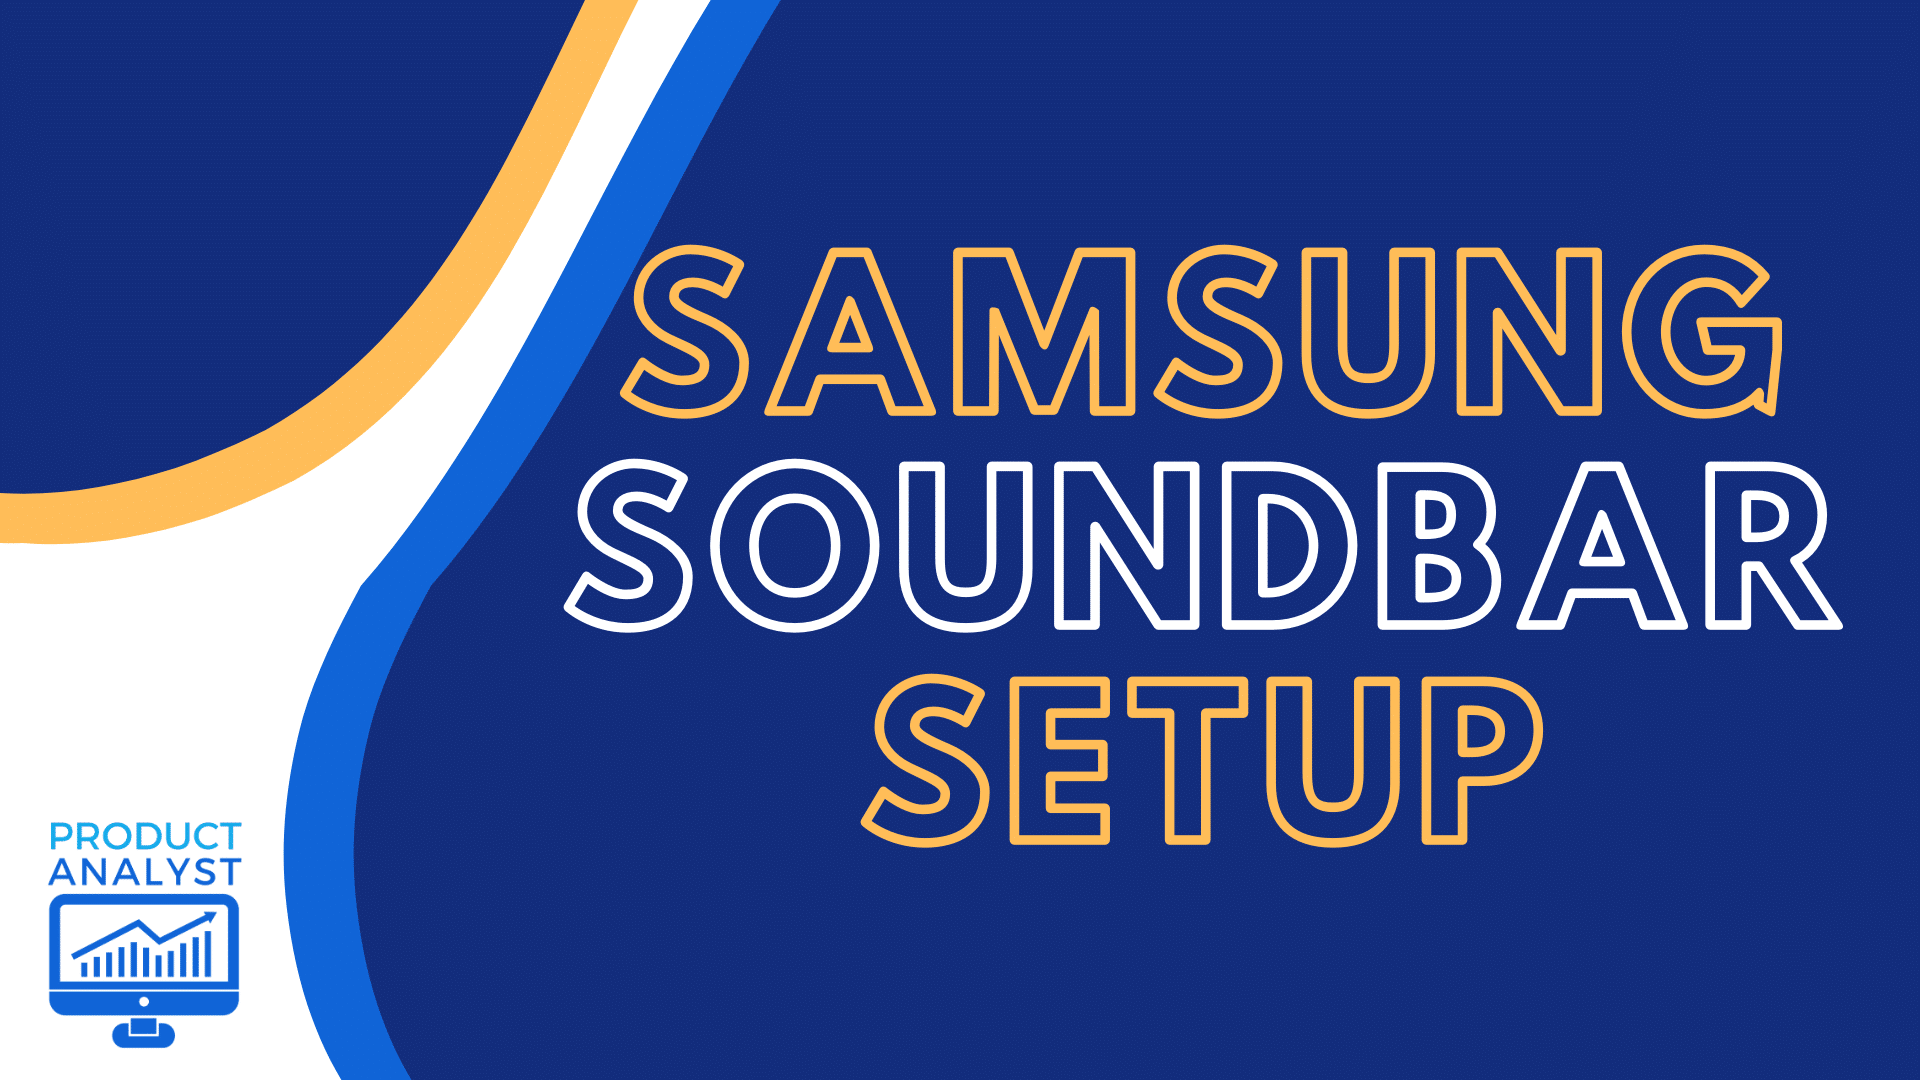 Samsung Soundbar Setup What are the Best Settings? [2022]